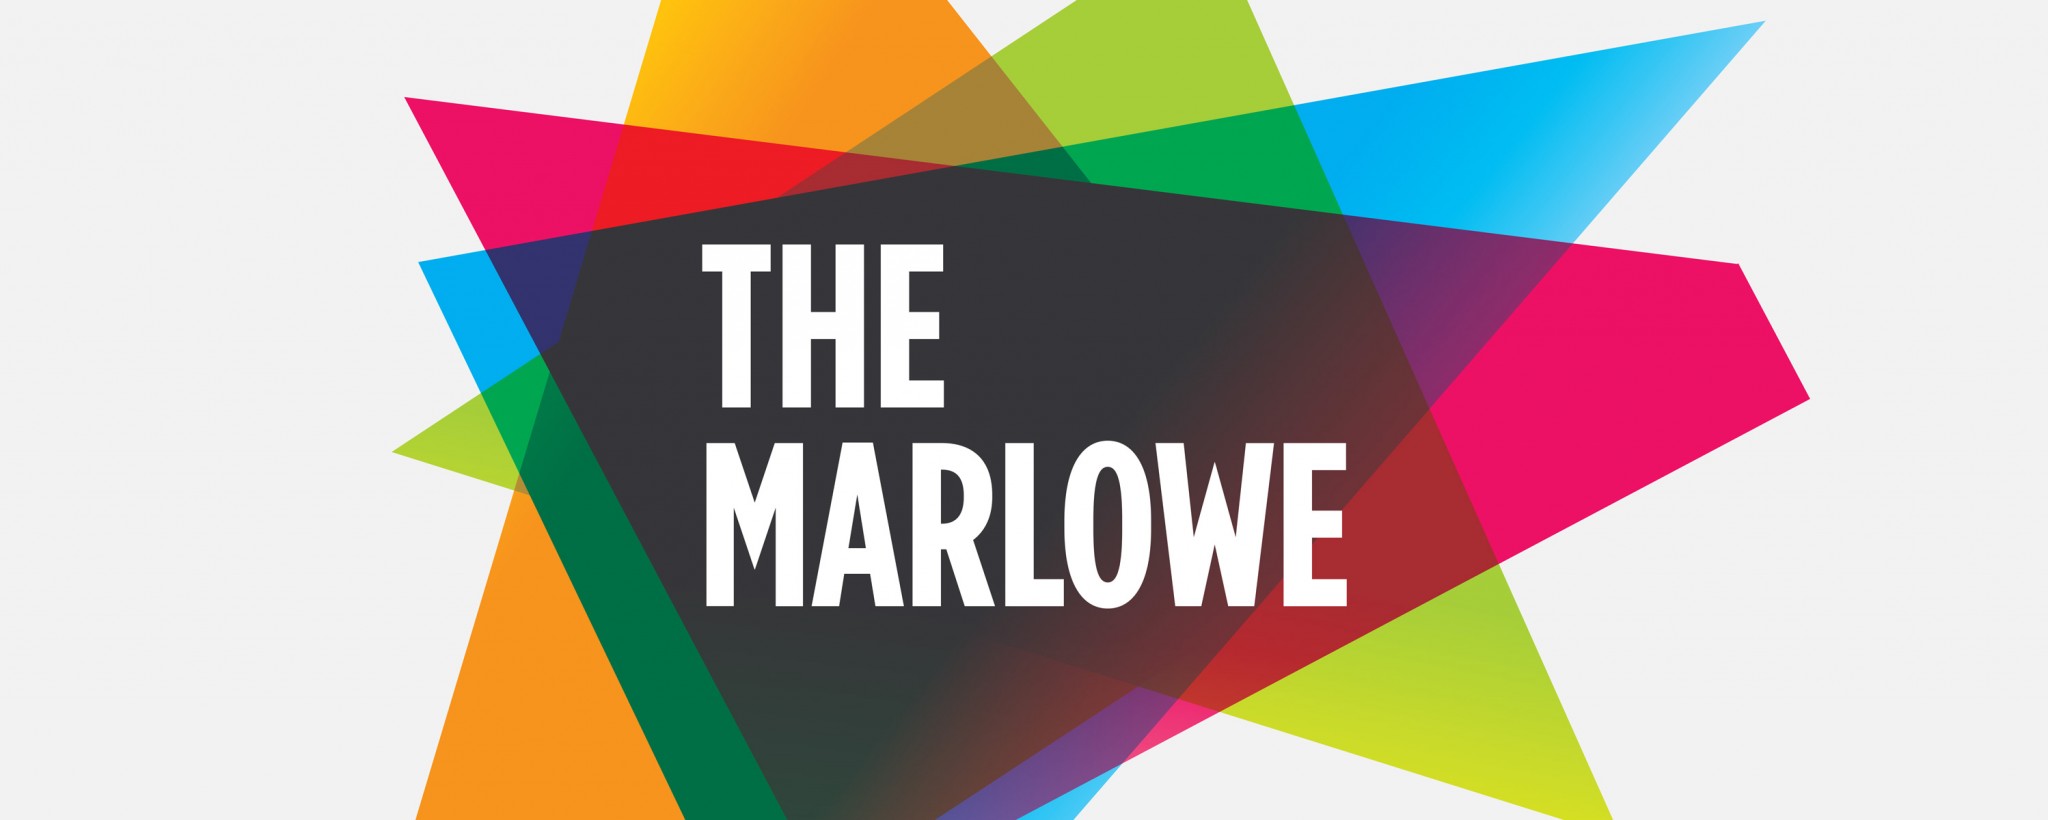 The Marlowe branding